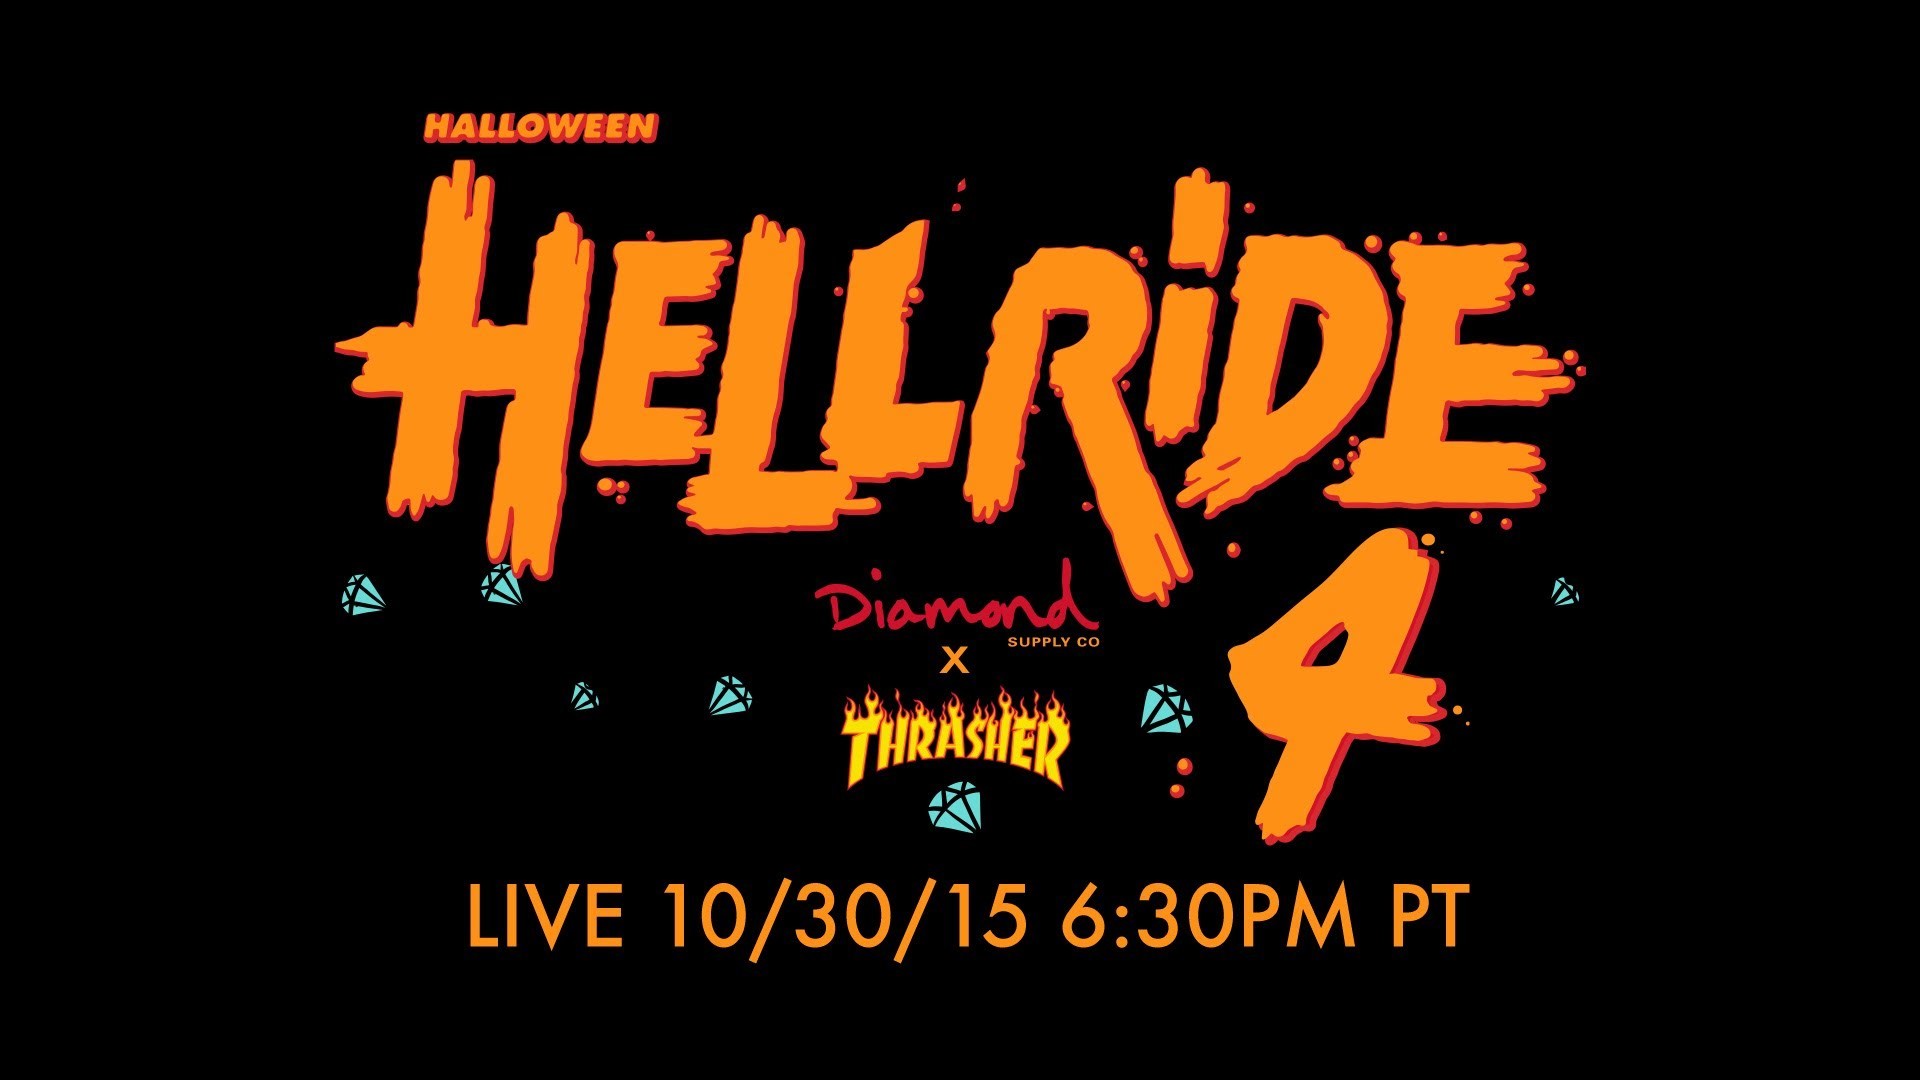 1920x1080 Diamond Supply Co. x Thrasher Halloween Hellride 4 | LIVE Skateboarding